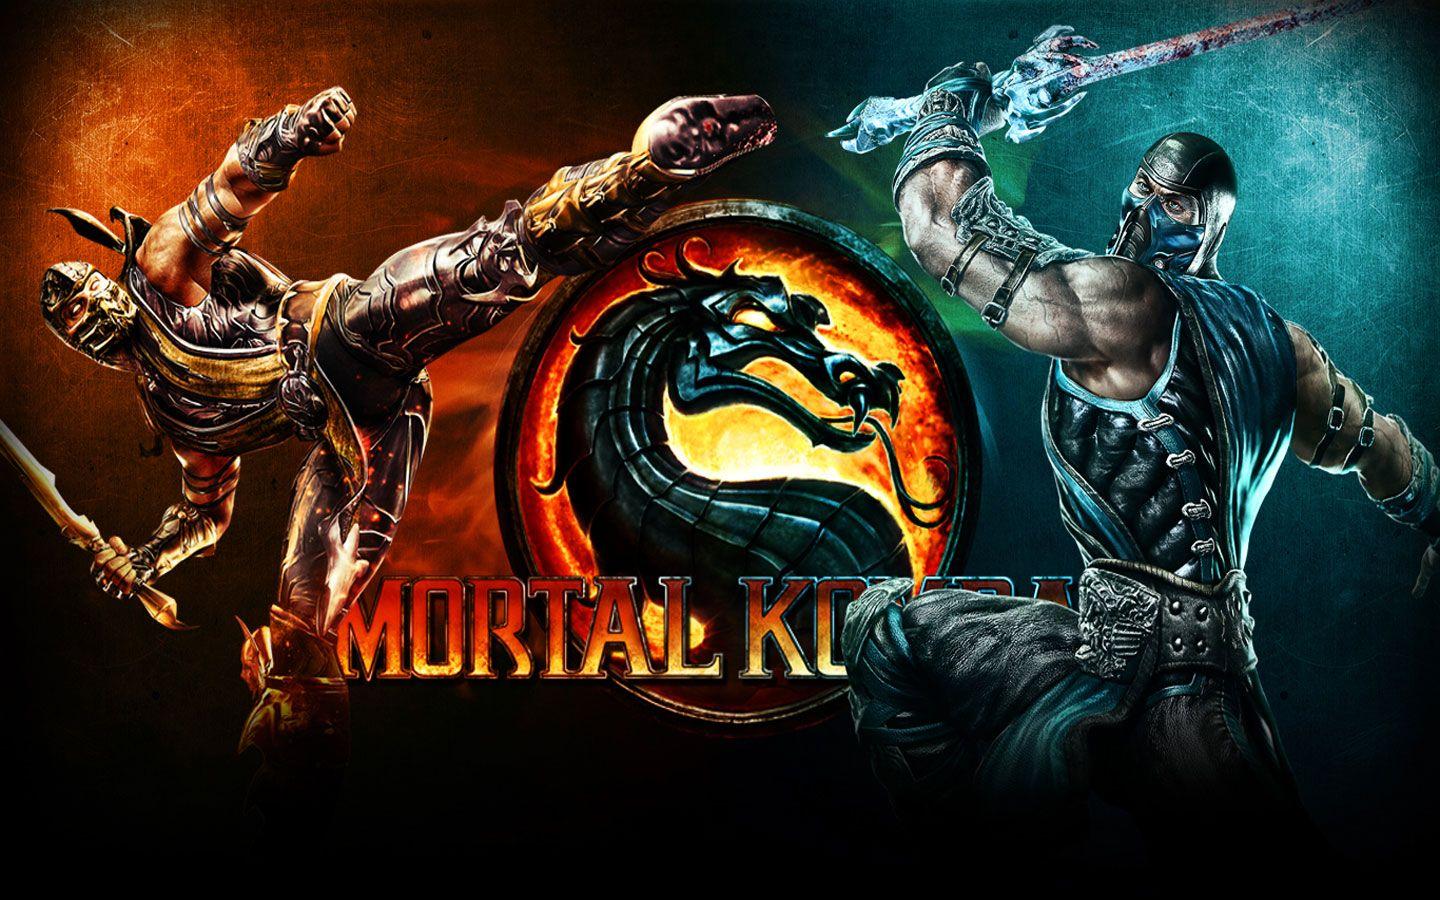 Mortal Kombat Scorpion Vs Sub Zero HD Wallpaper, Background Image